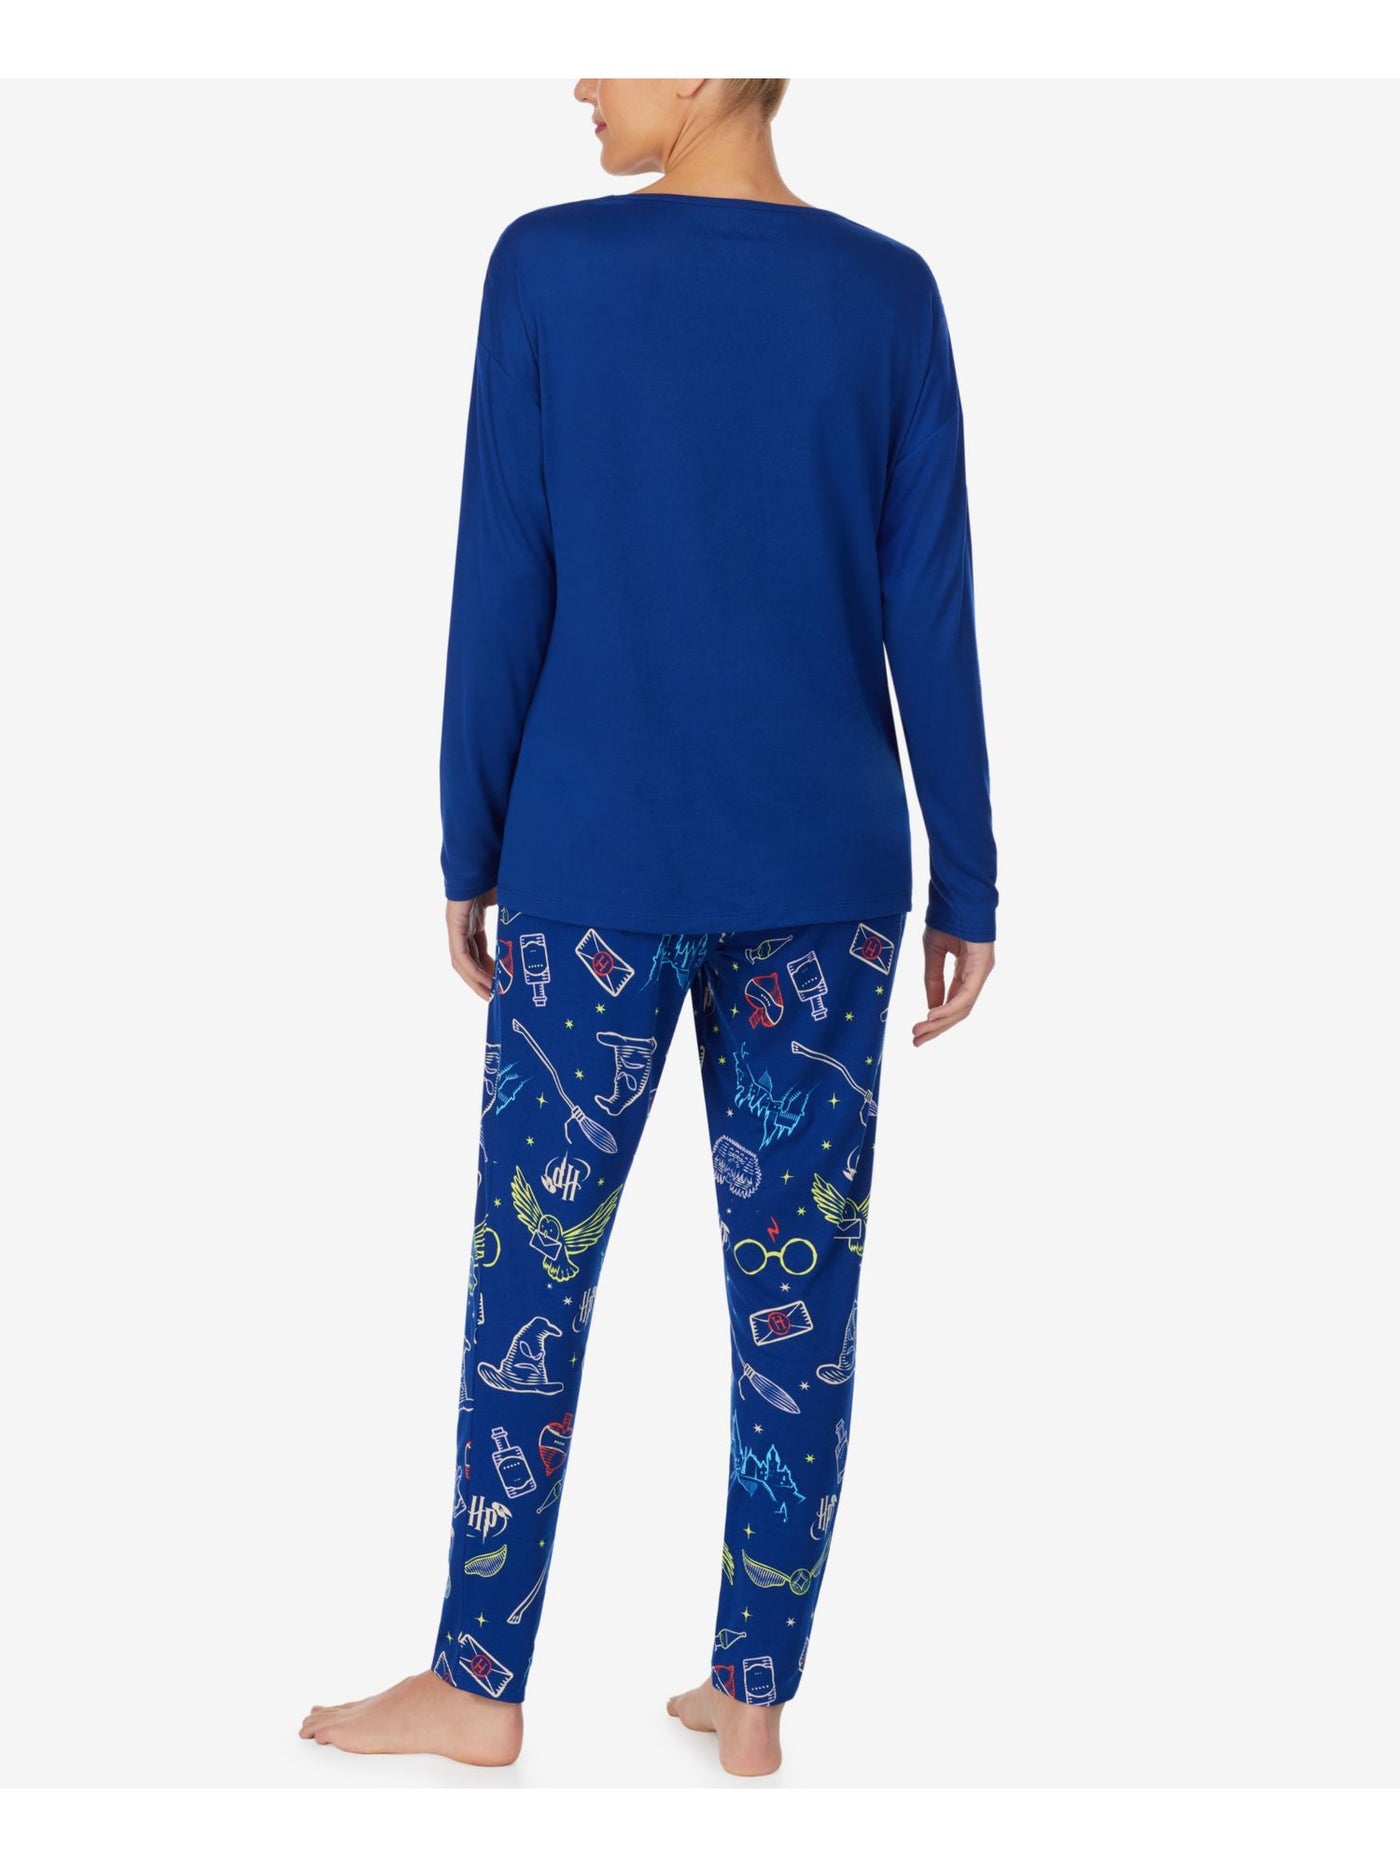 HYBRID APPAREL Womens Blue Graphic Top Elastic Band Long Sleeve Skinny Pants Pajamas M